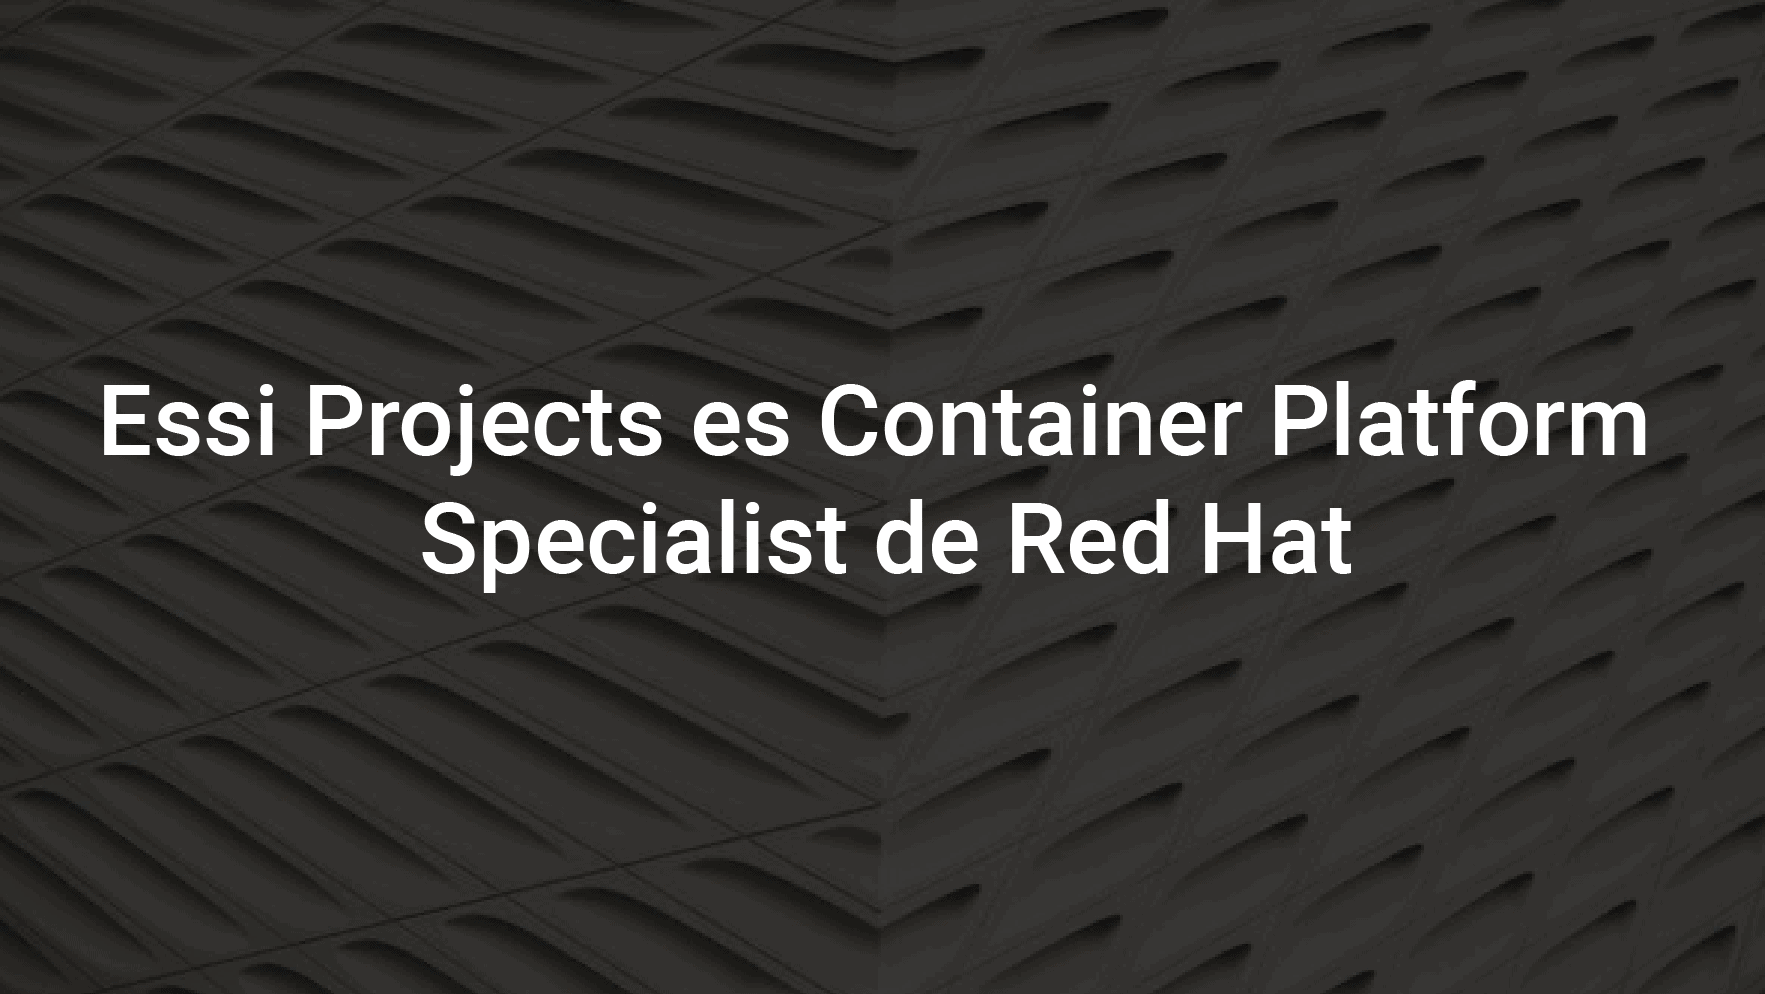 Essi Projects es Container Platform Specialist de Red Hat